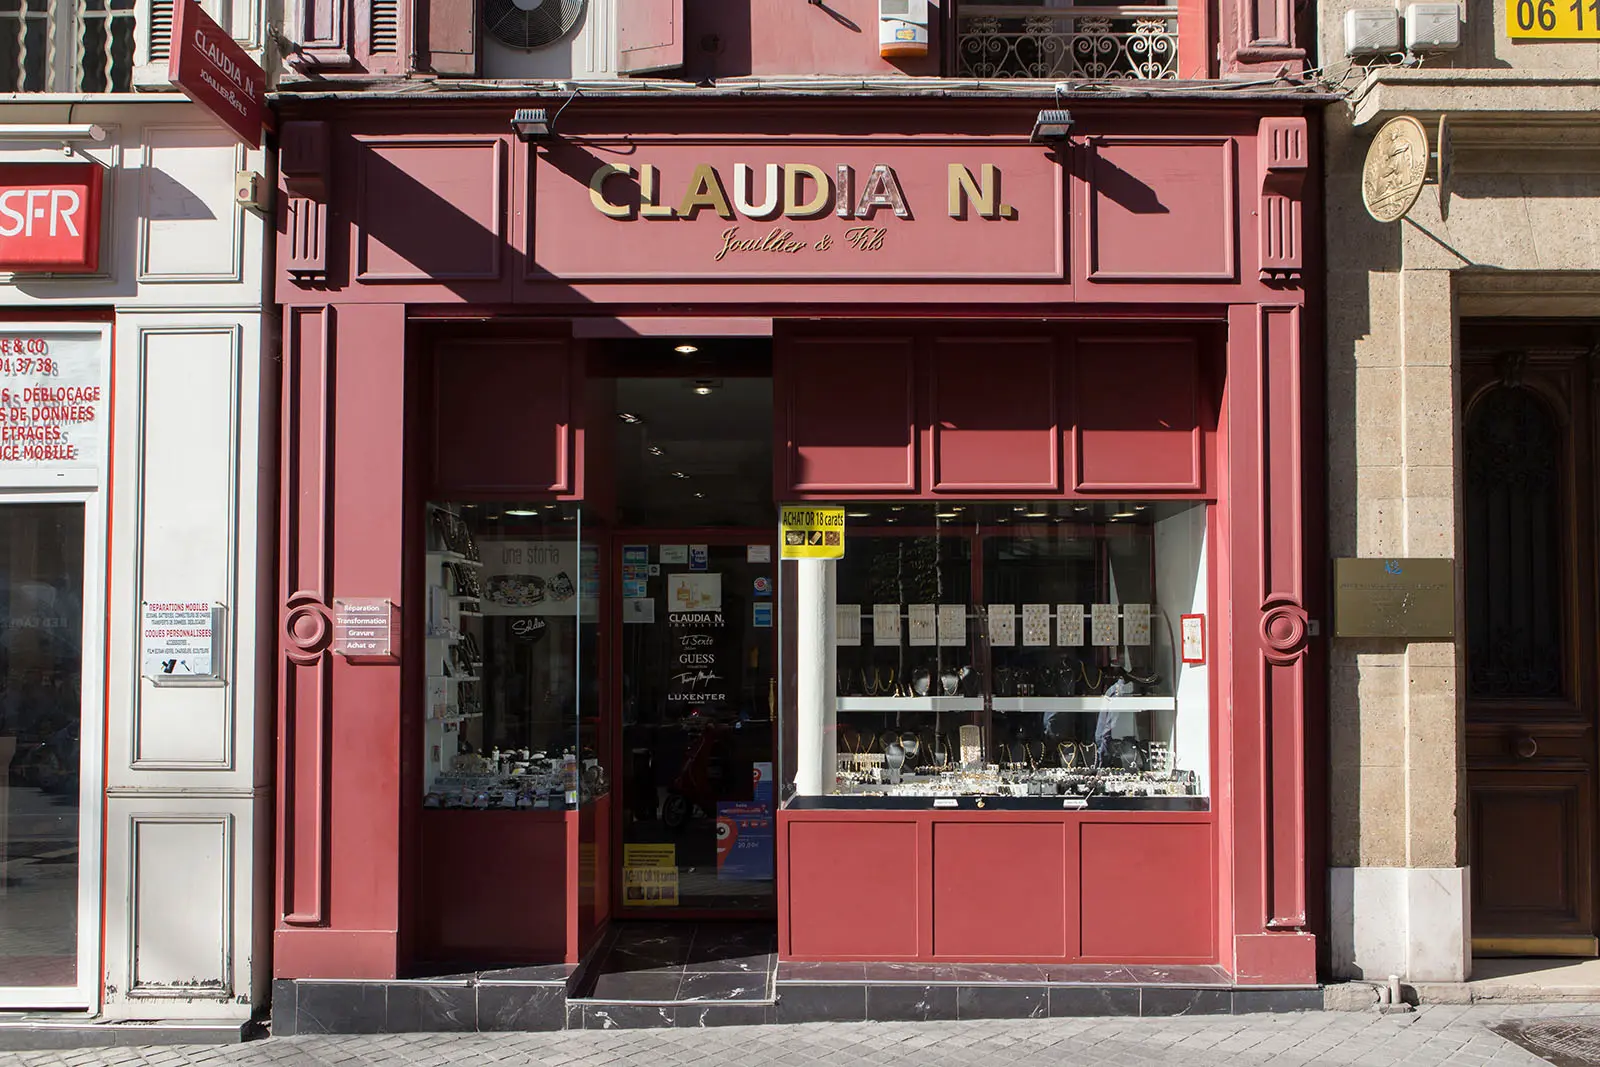 Claudia N